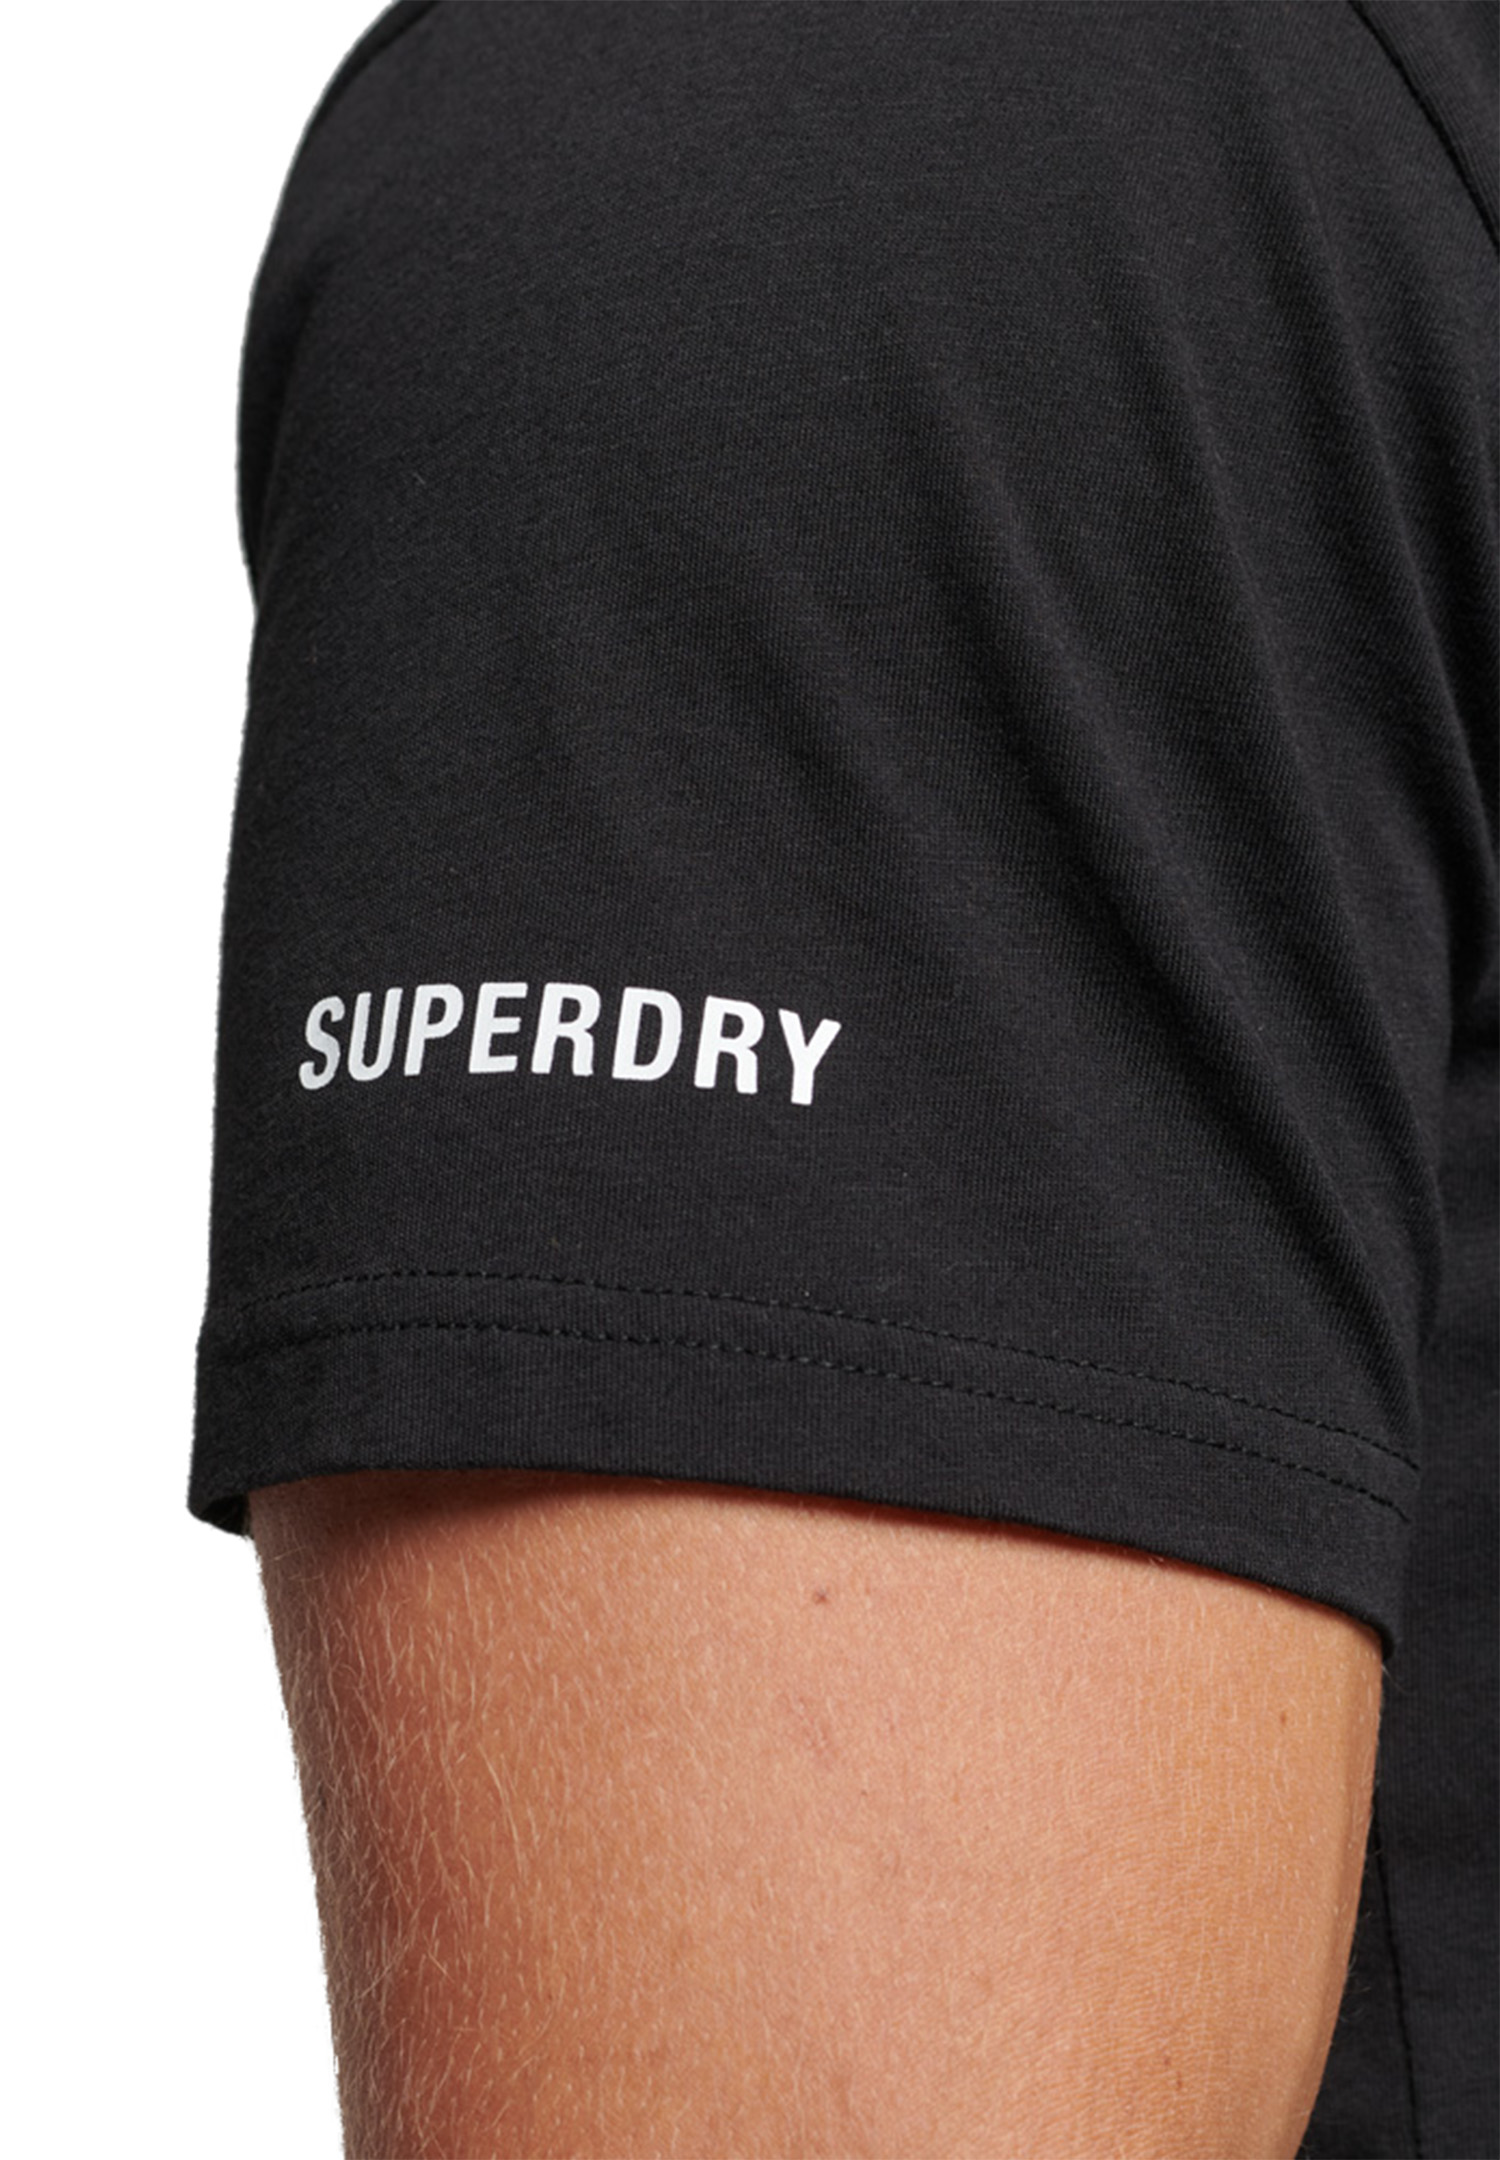 Superdry Core Loose Sort Sleeve Tee T-Shirt Herren Shirt MS311304A schwarz